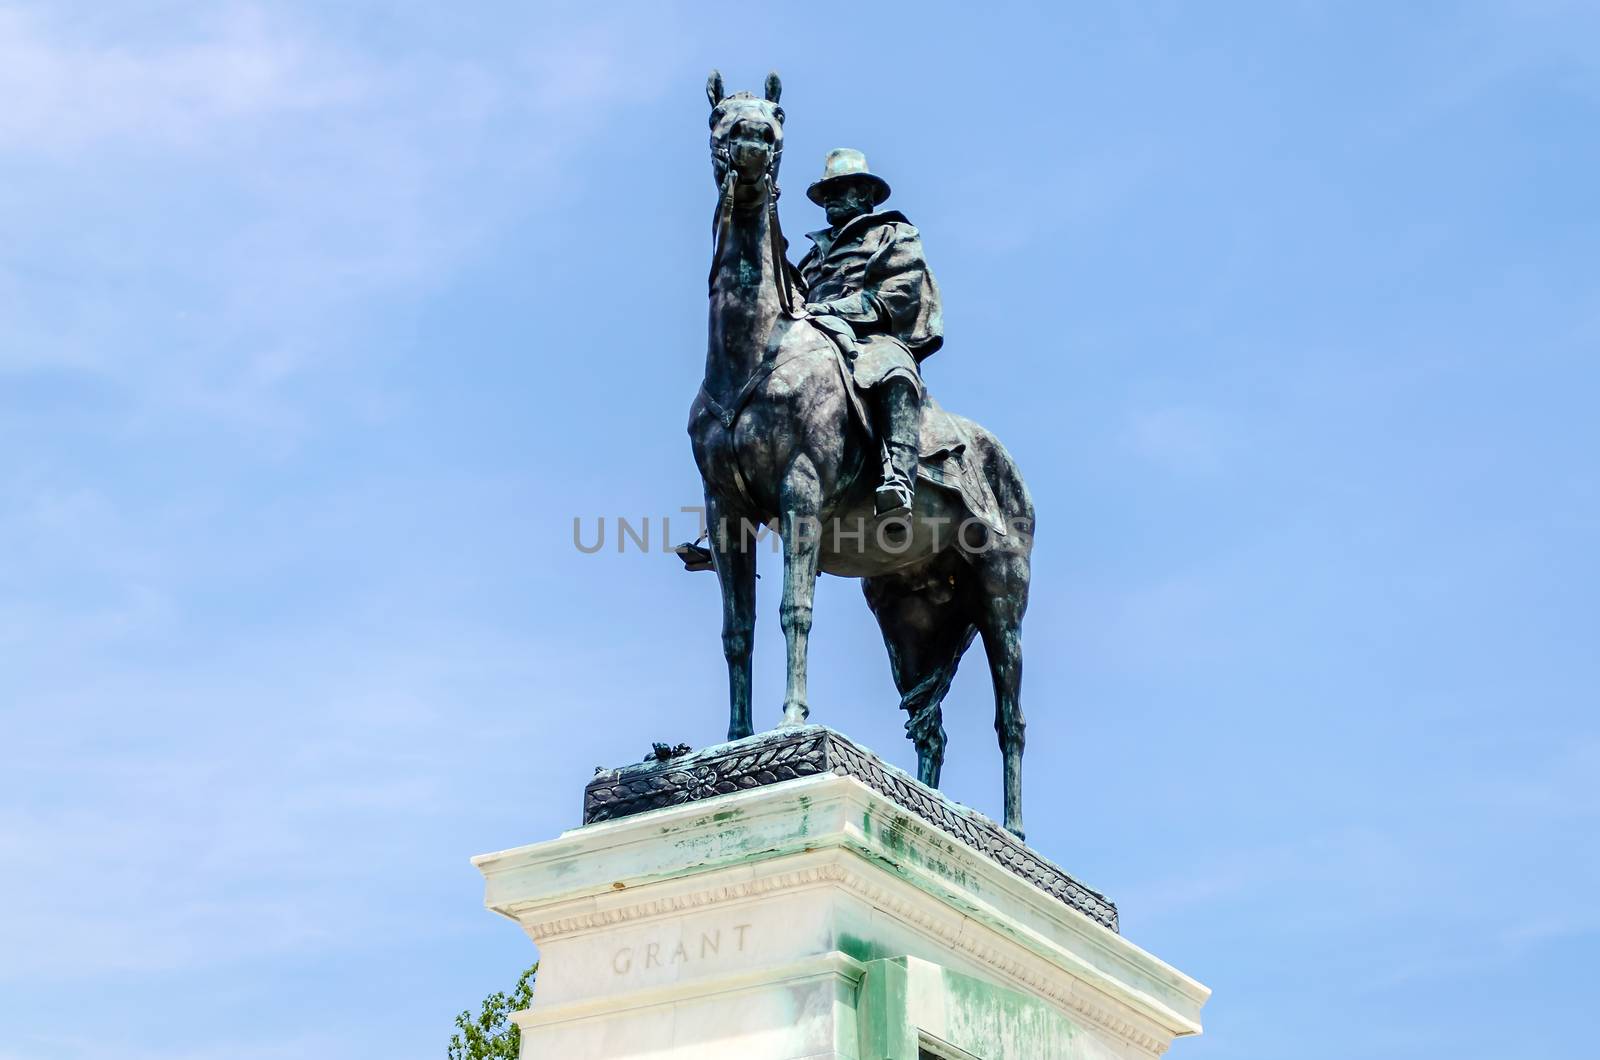 Ulysses S. Grant Memorial Washington DC by marcorubino